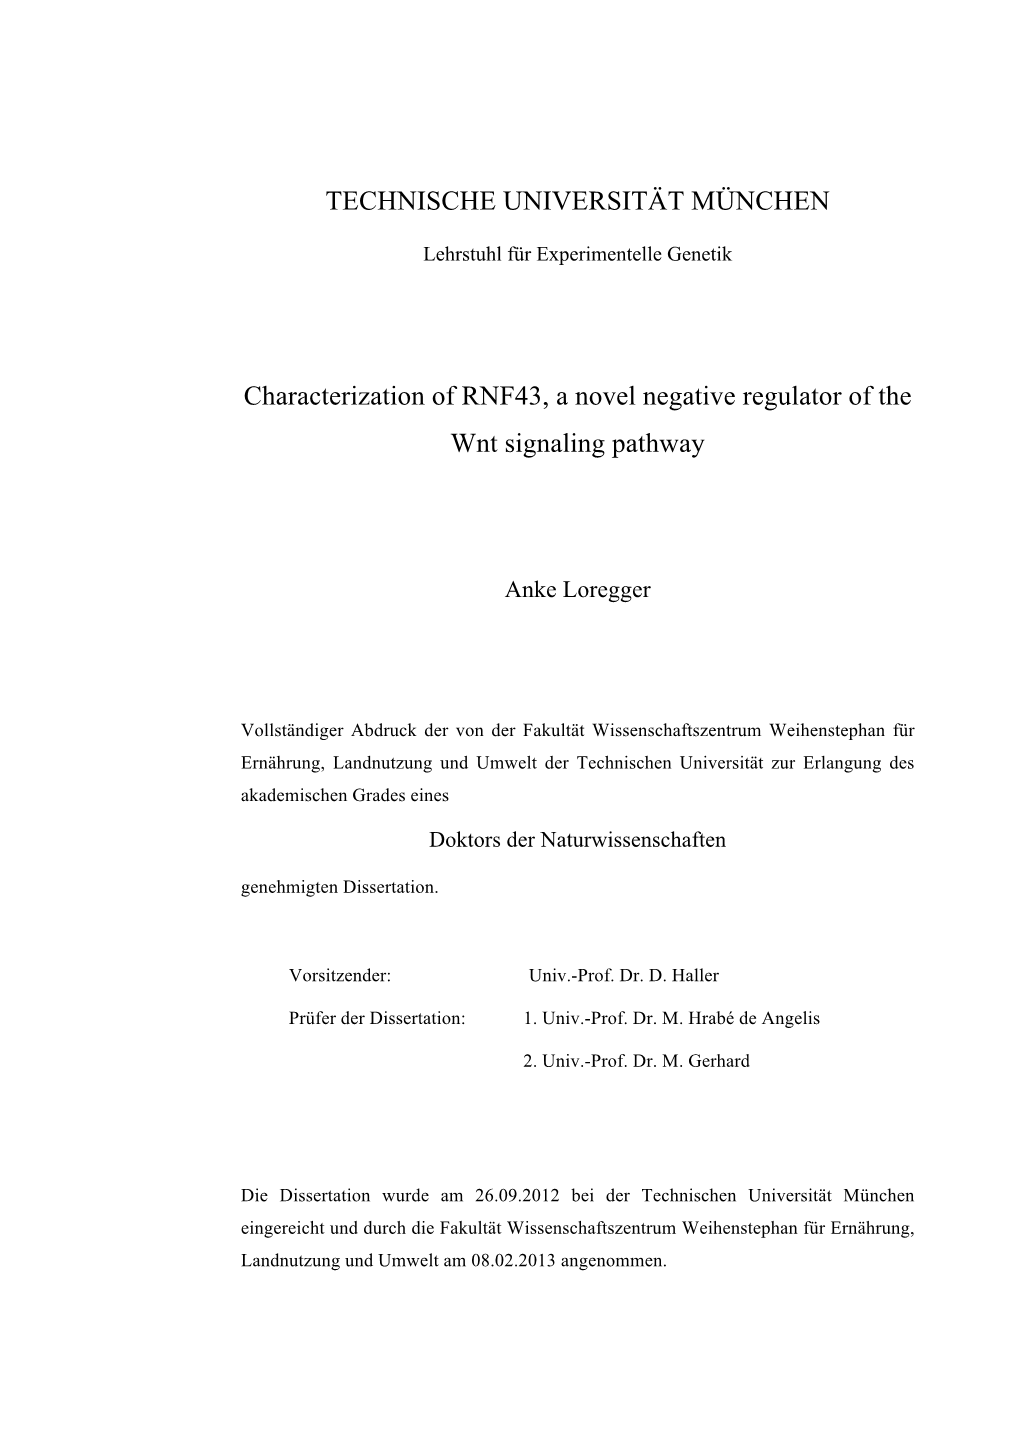 TECHNISCHE UNIVERSITÄT MÜNCHEN Characterization of RNF43, a Novel Negative Regulator of the Wnt Signaling Pathway